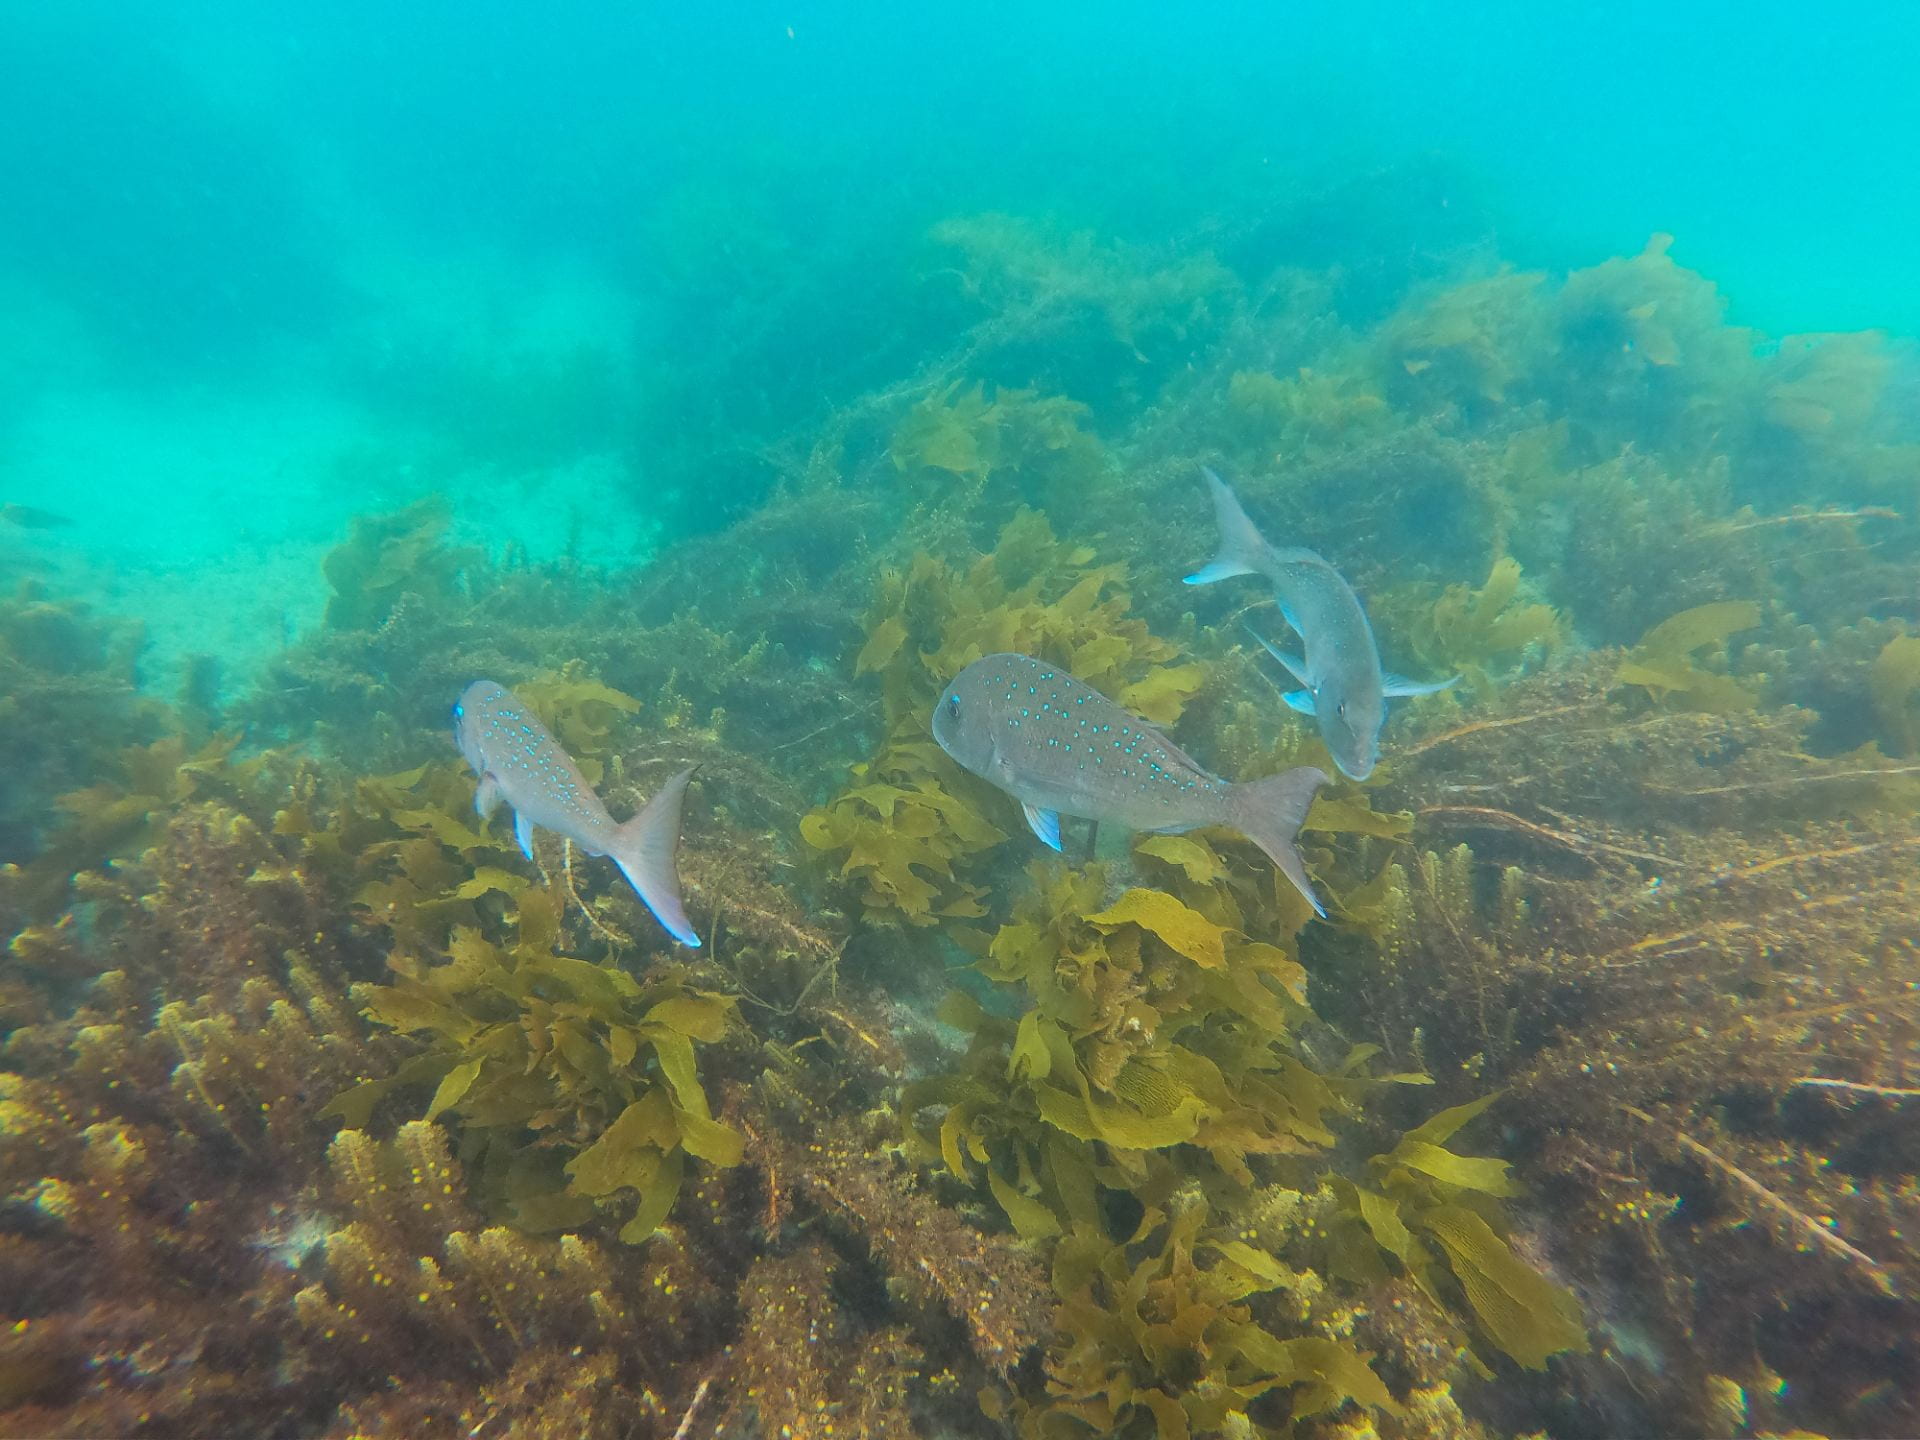 Snapper swimming through kelp forest at Cape Rodney-Okakari Point Marine Reserve.